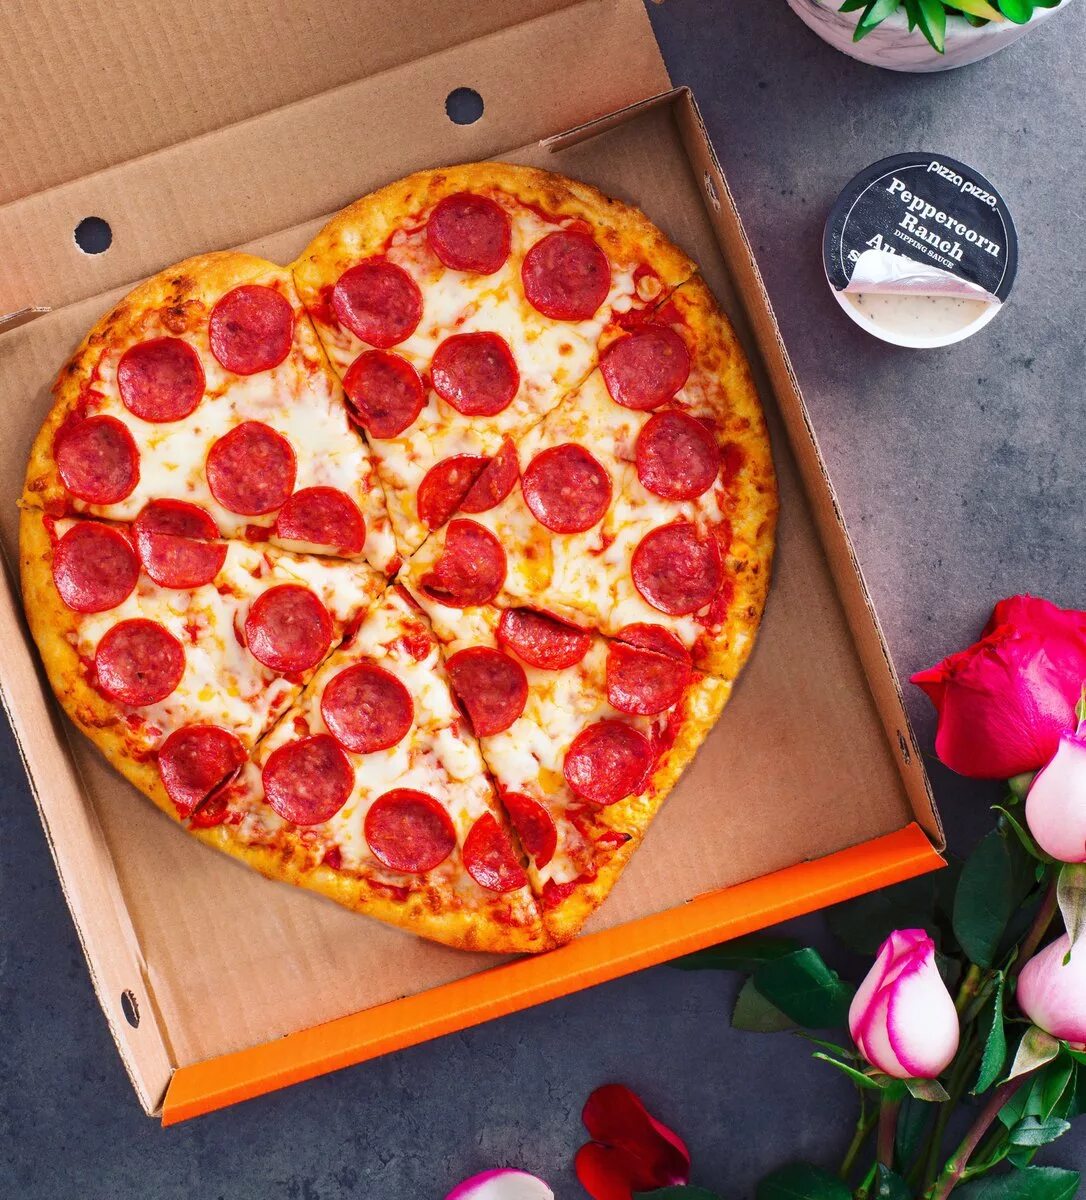 Додо пицца сердце. Пицца пепперони сердце. Пицца пепперони сердце Додо. Пицца в виде сердца. Пицца в форме сердца.